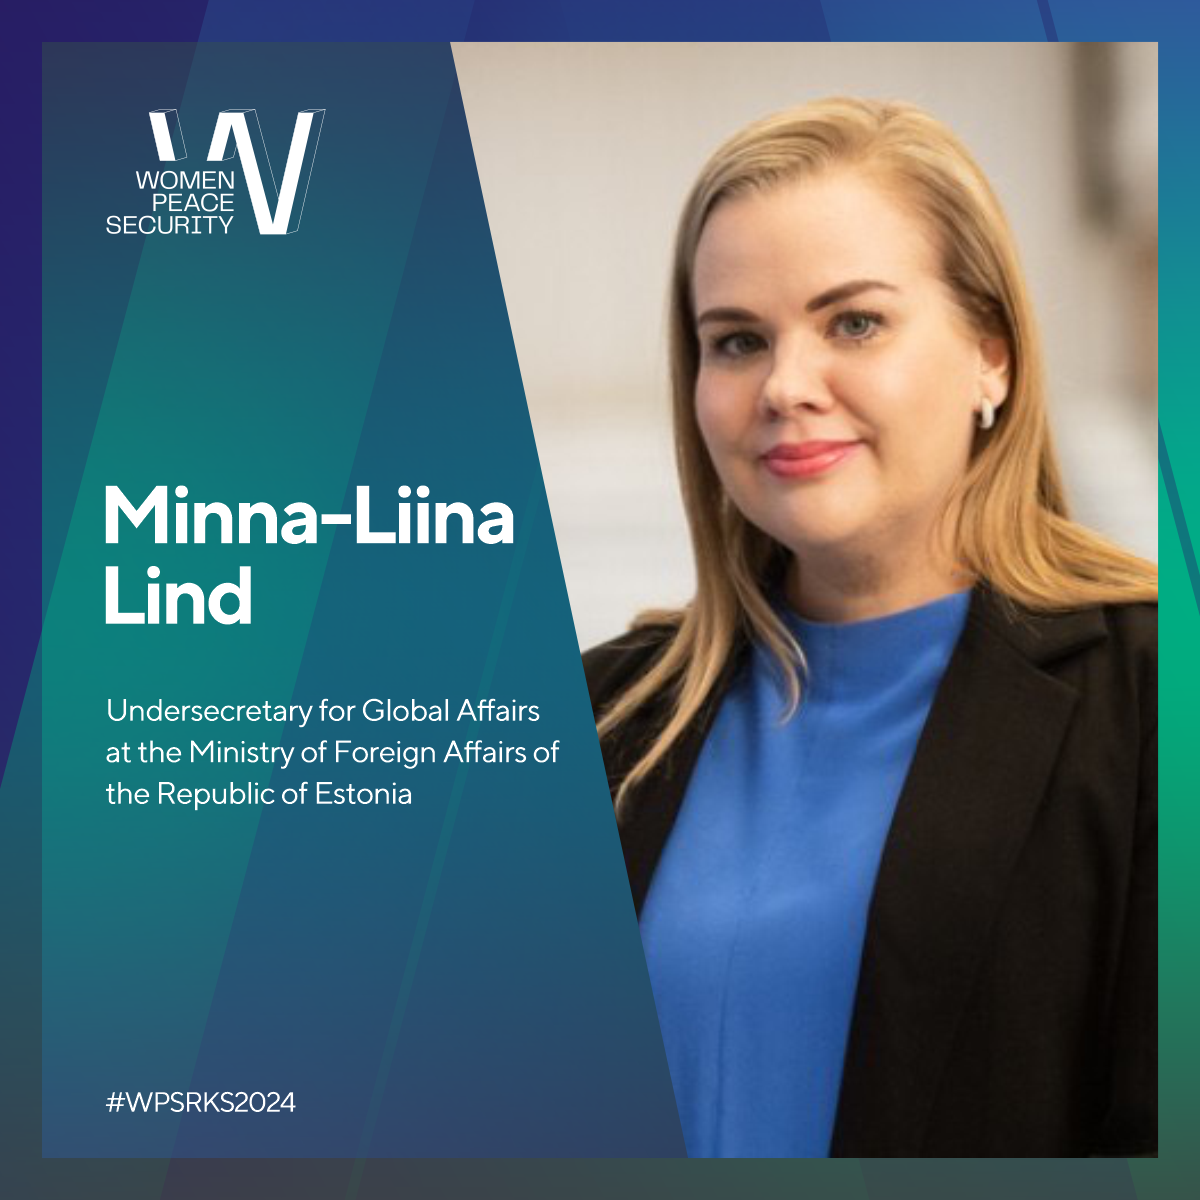 WPS_MINNA-LIINA LIND